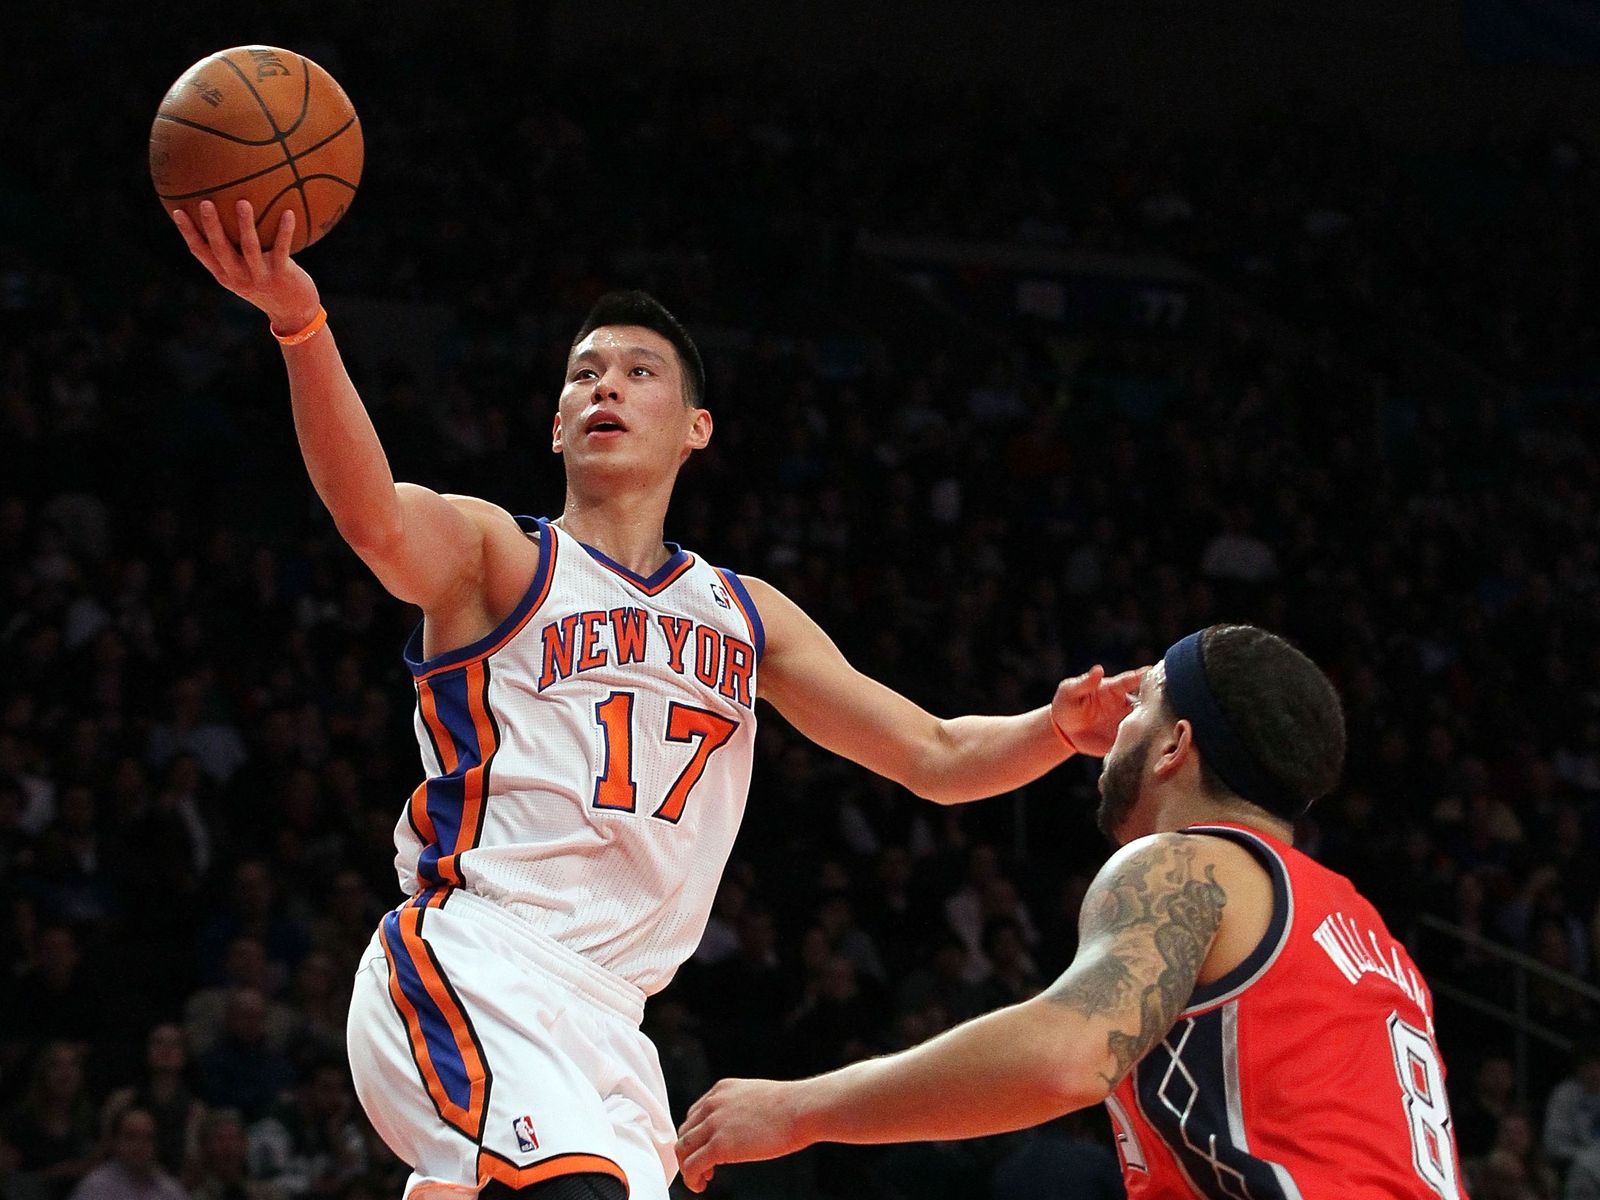 Basketball player who called Jeremy Lin 'coronavirus' identified